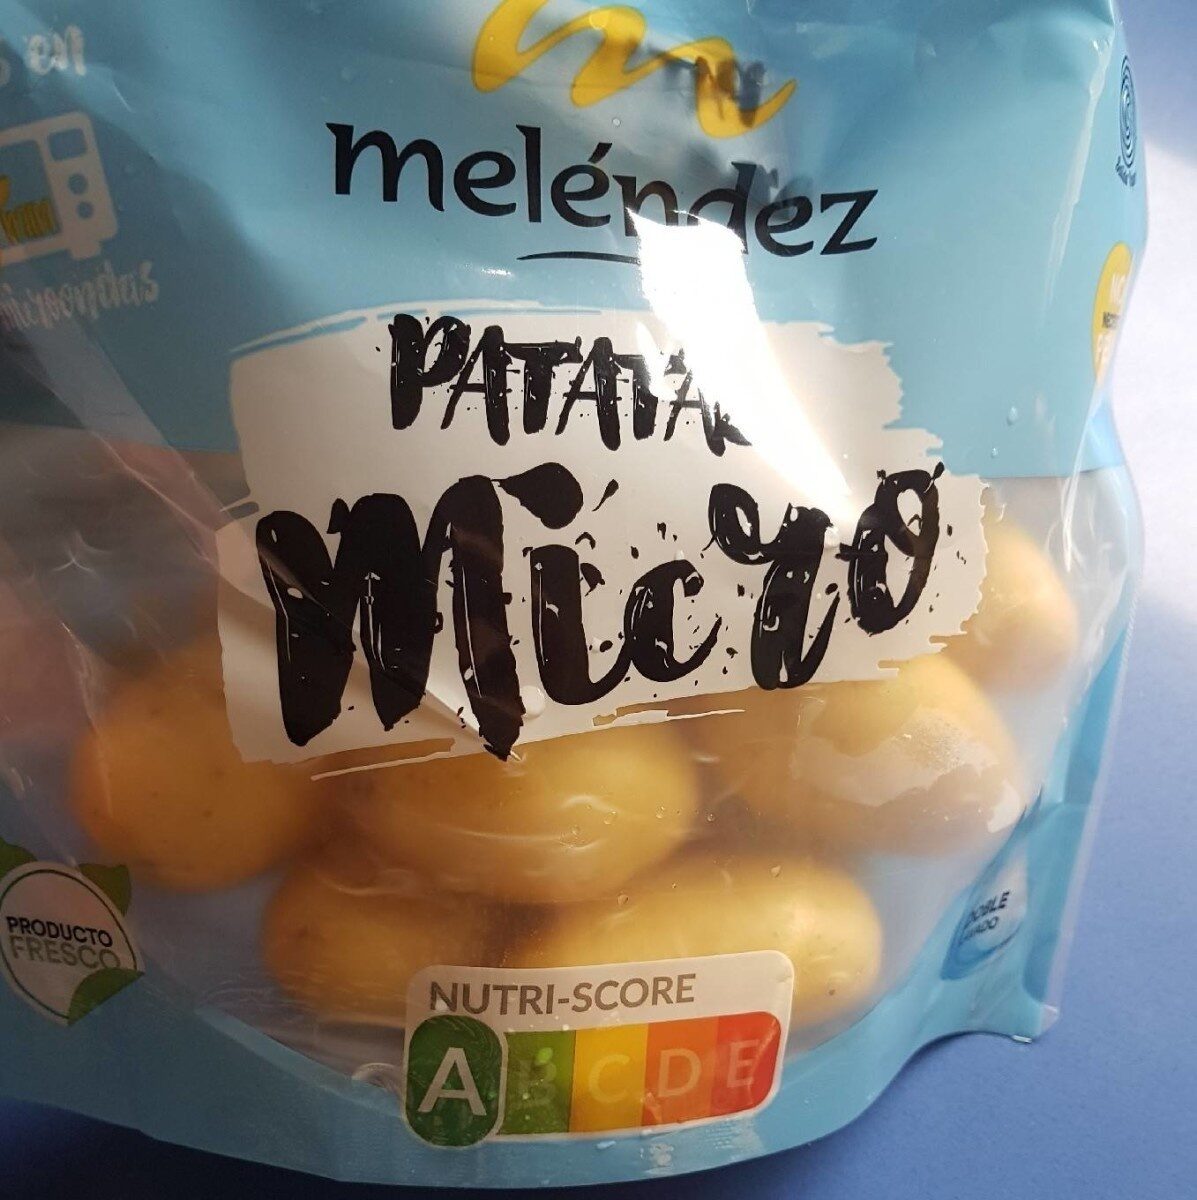 Patatas micro - Producto